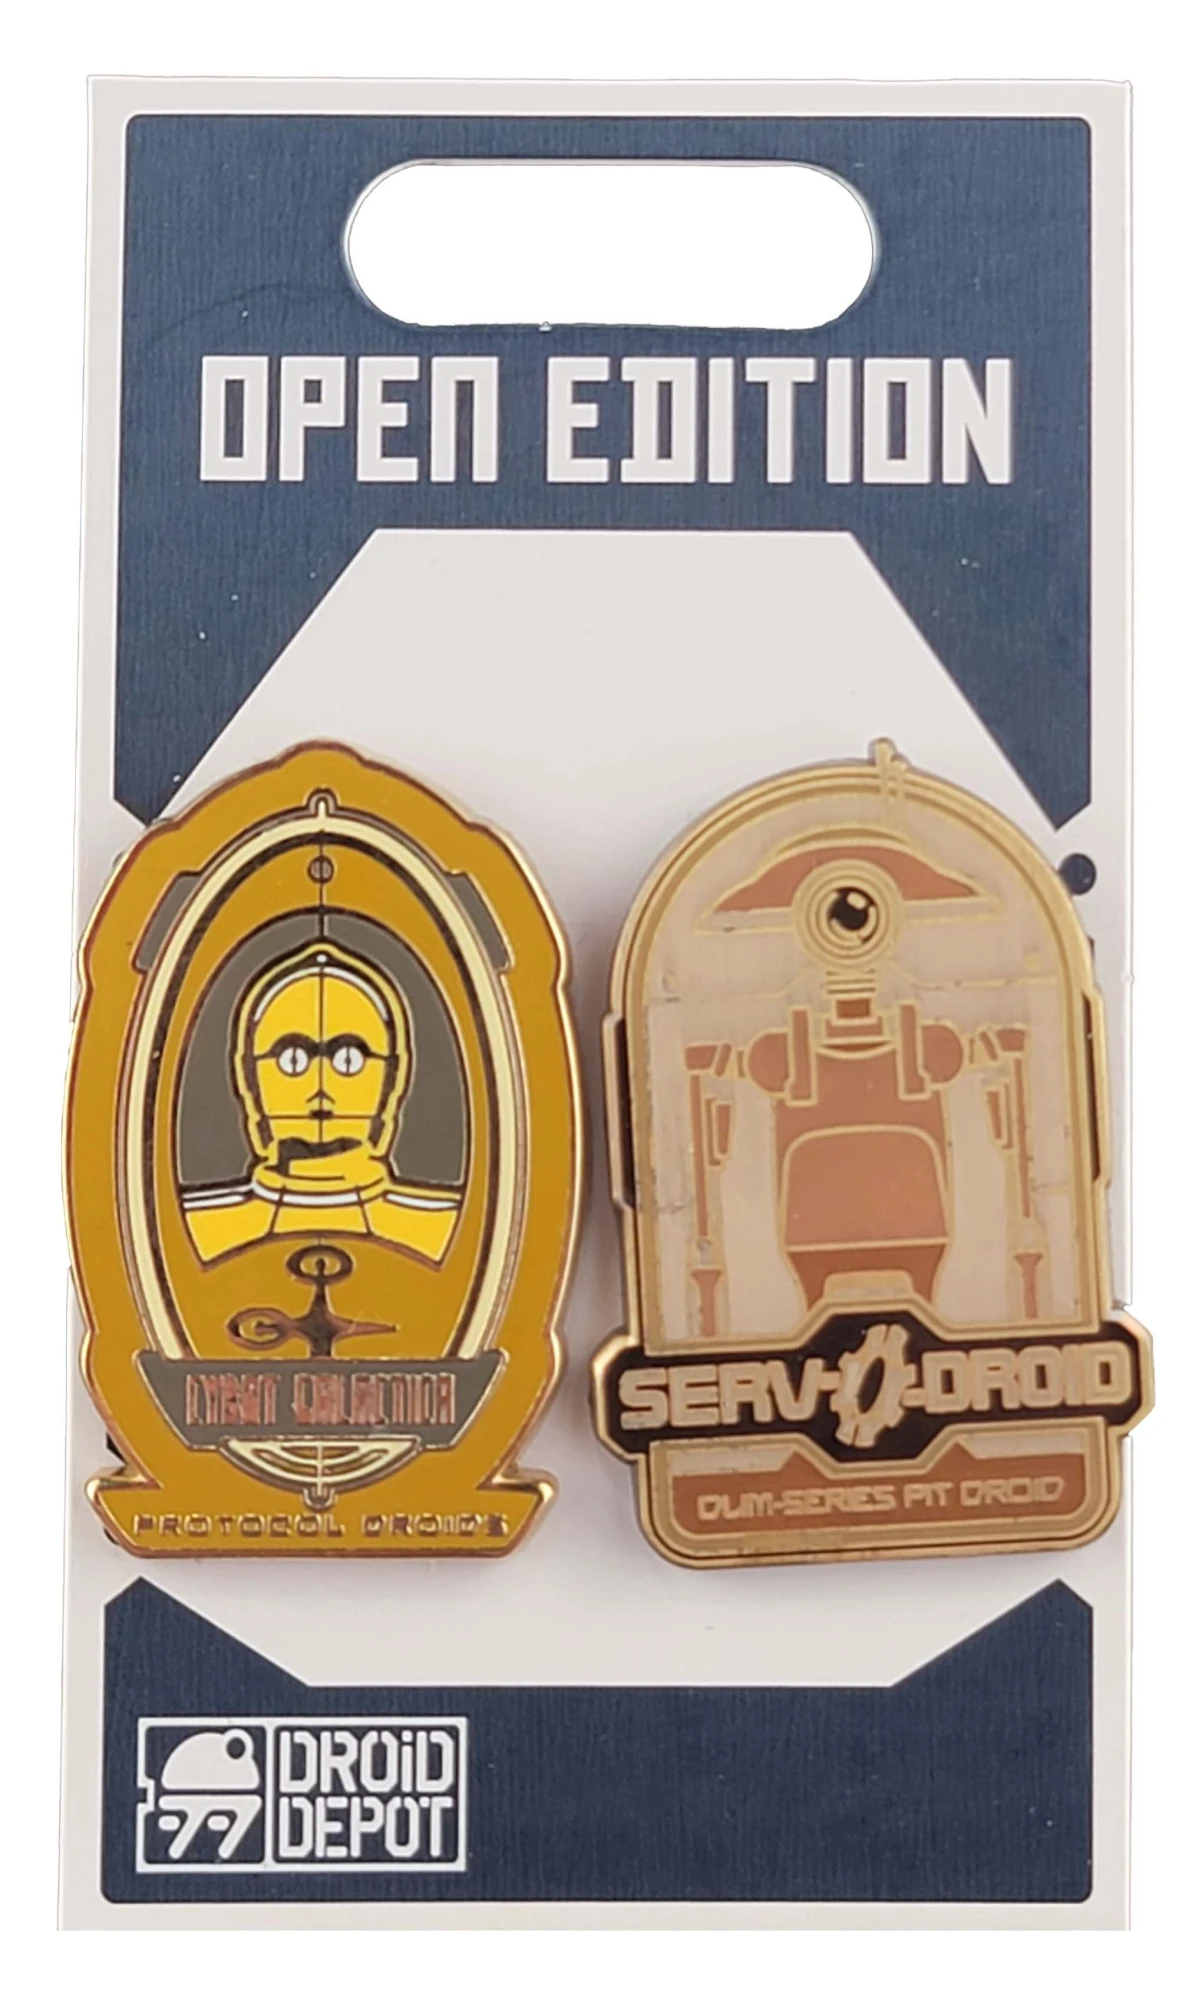 item Disney Pin - Serv Droid Set - SWGE Droid Depot - Cybot Galactica - Star Wars C-3PO Pit Droid serv